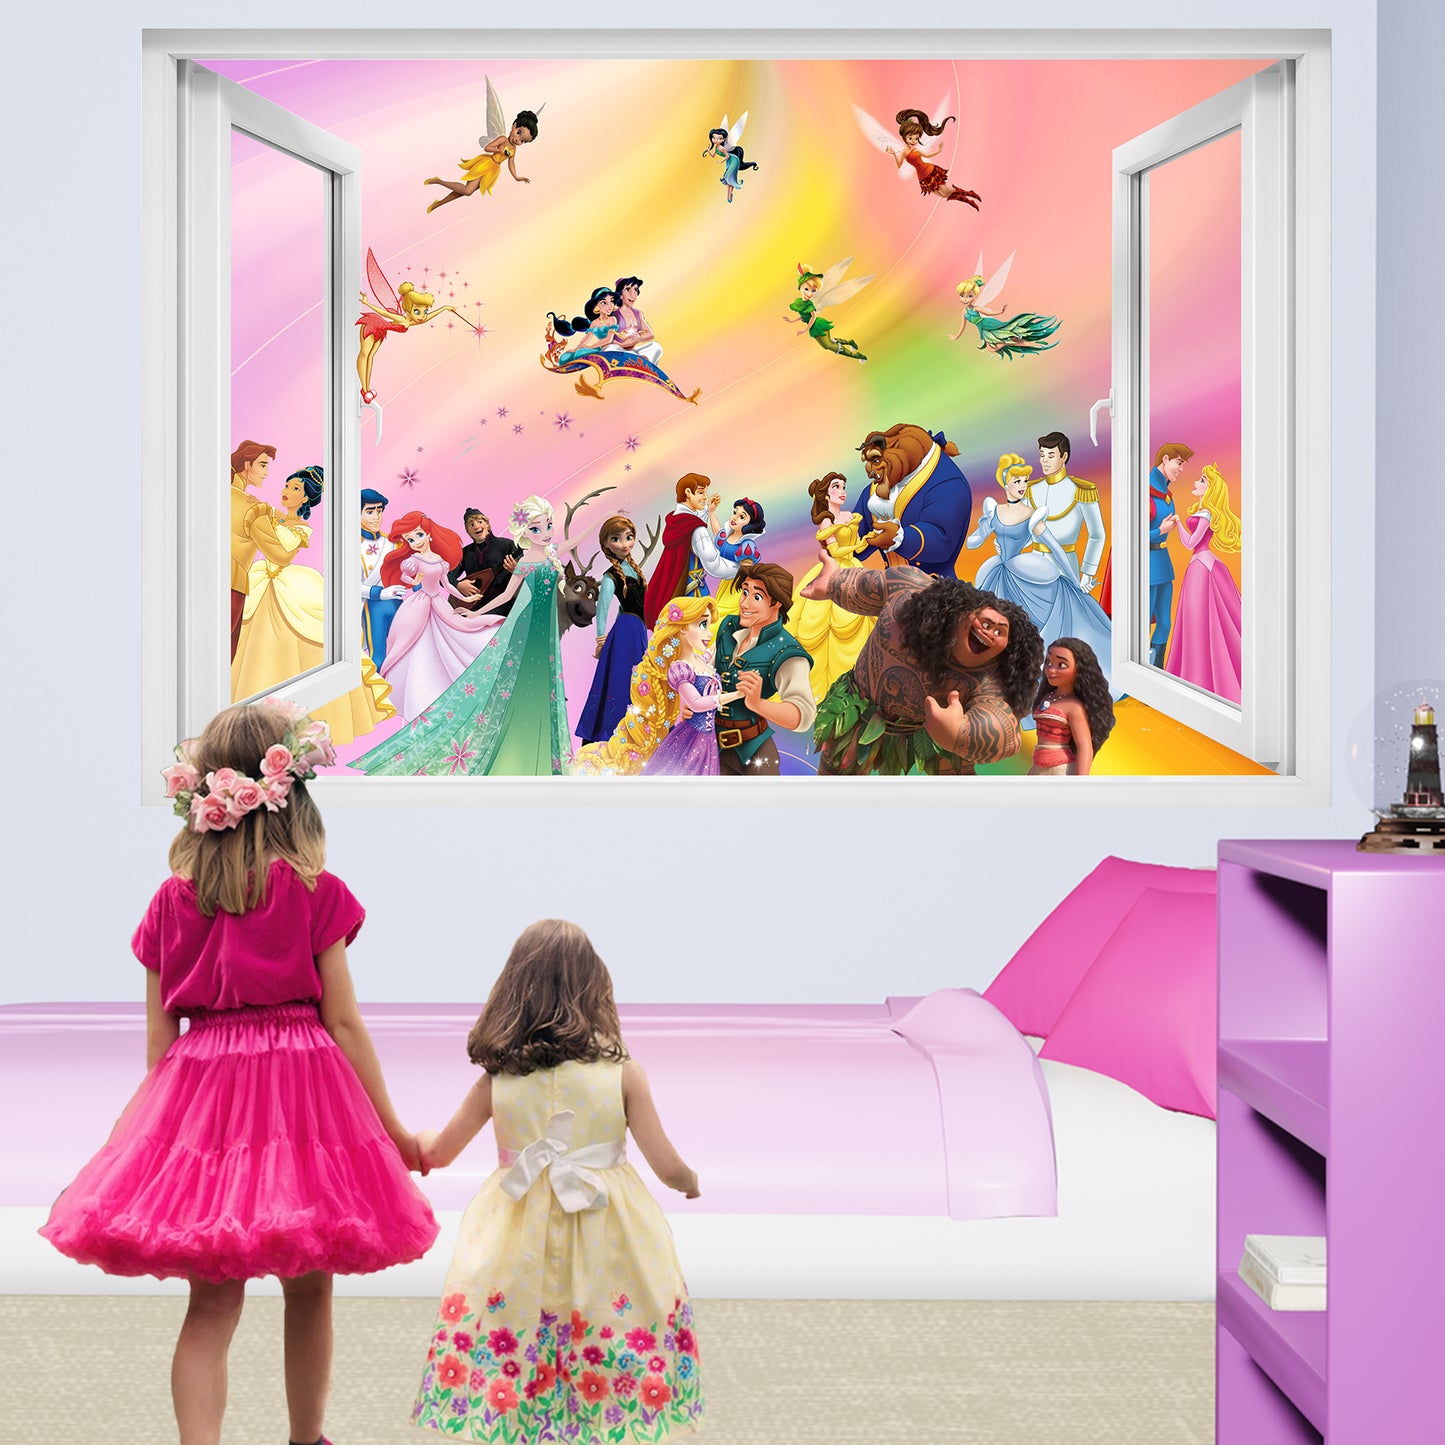 Rainbow Princess and Prince Characters Big Wall Sticker Art Poster Decal Mural  Nursery Bedroom Decor 1092